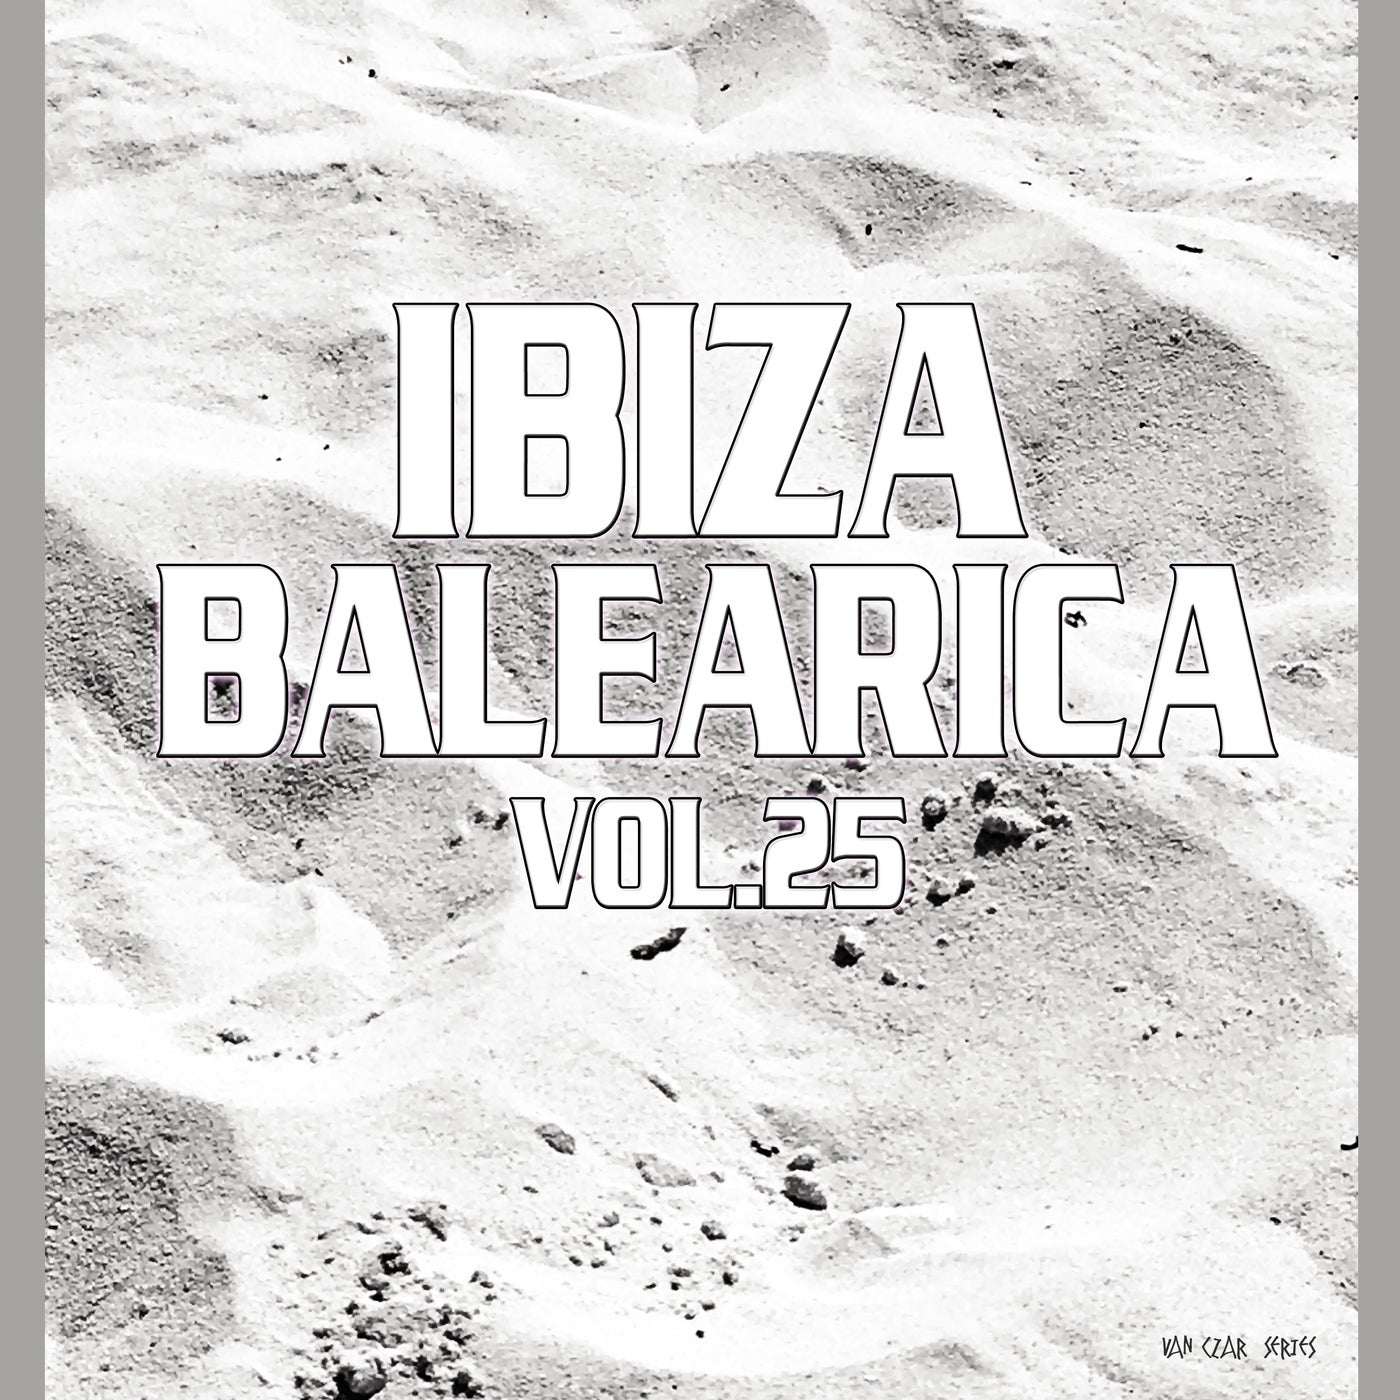 Ibiza Balearica, Vol. 25